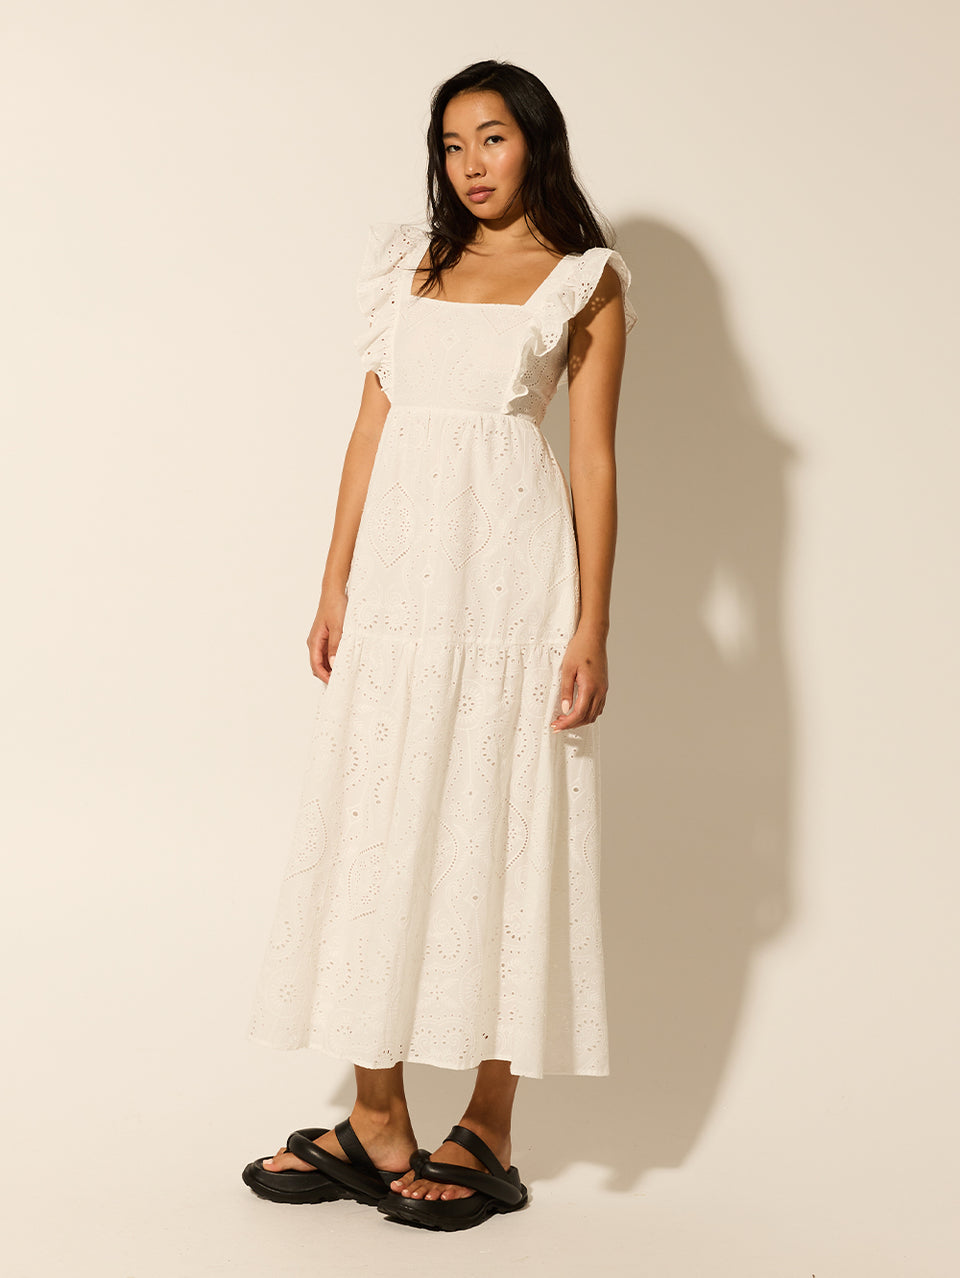 Clove Midi Dress KIVARI | Model wears white embroidered midi dress side view